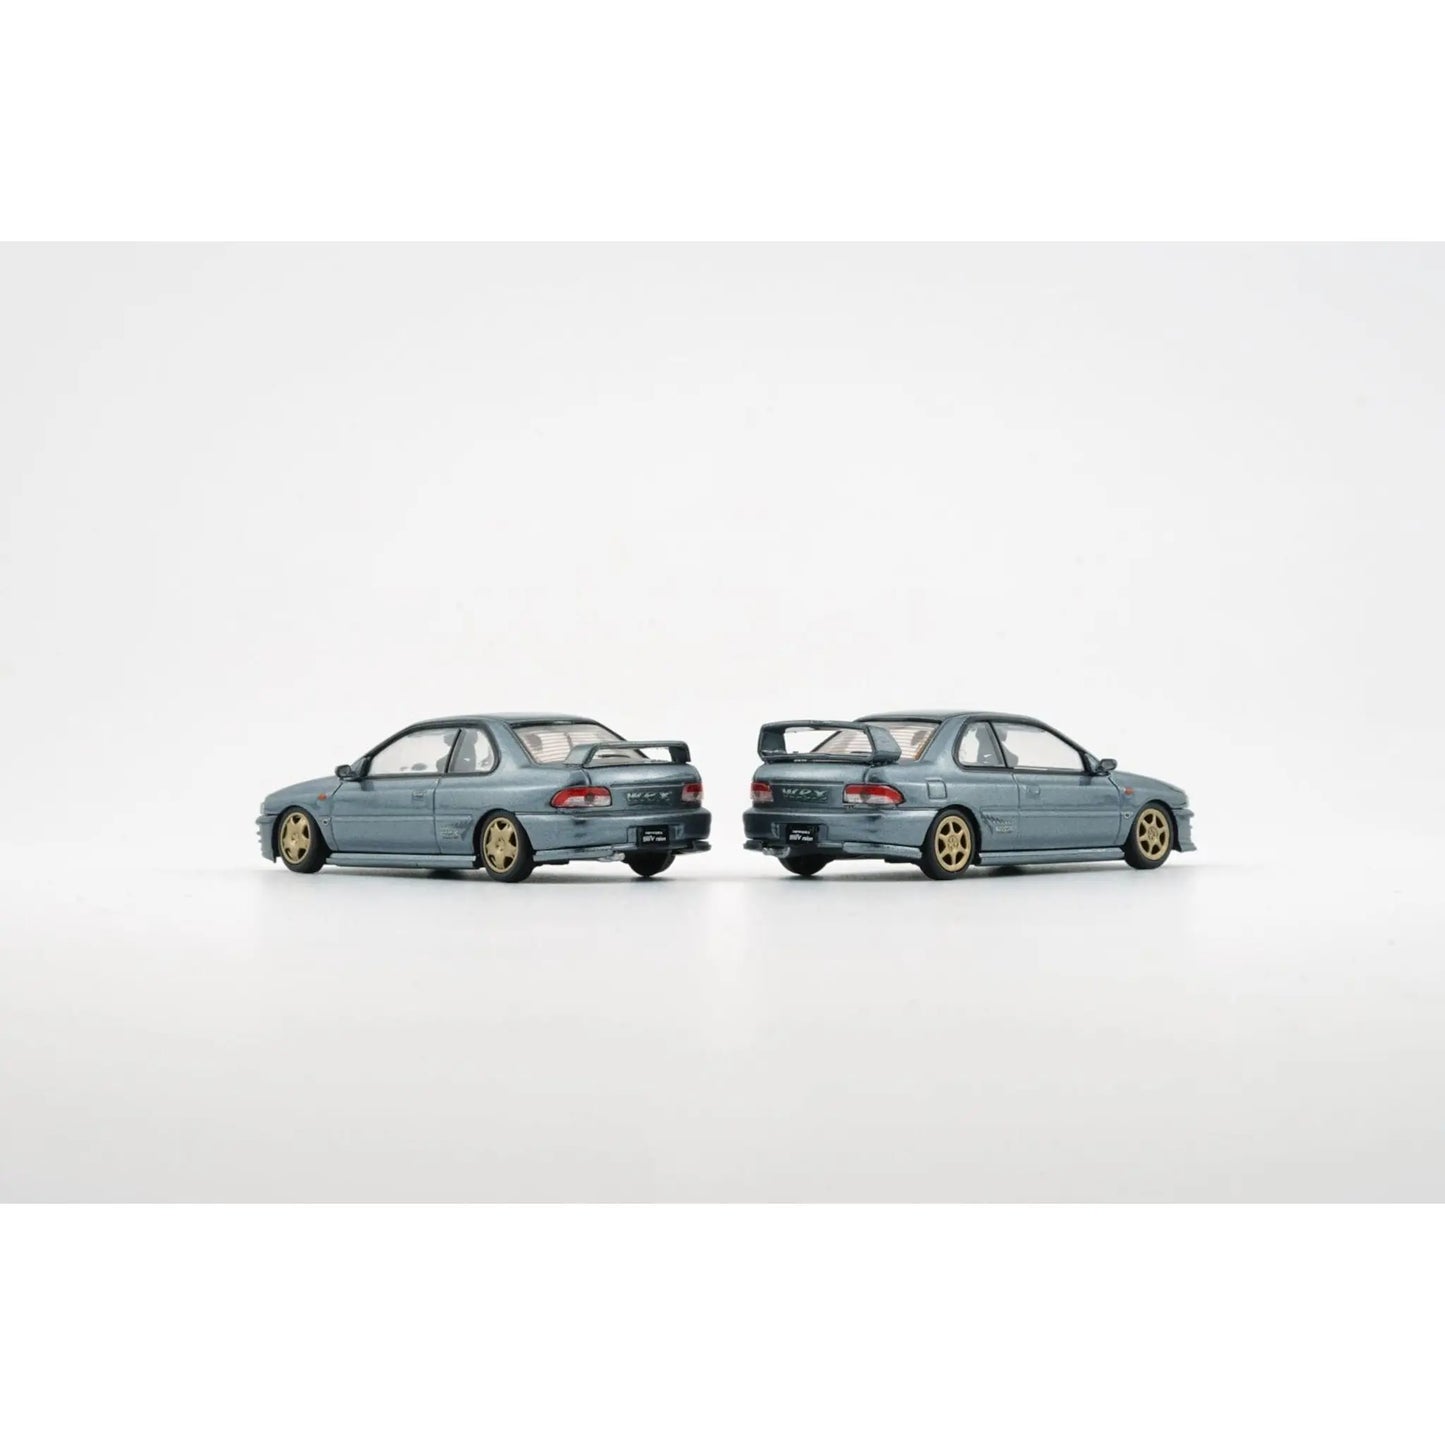 Subaru Impreza WRX Type R generation 3 till 6 dolphin grey LHD BM Creations 1/64 | Motors Miniatures